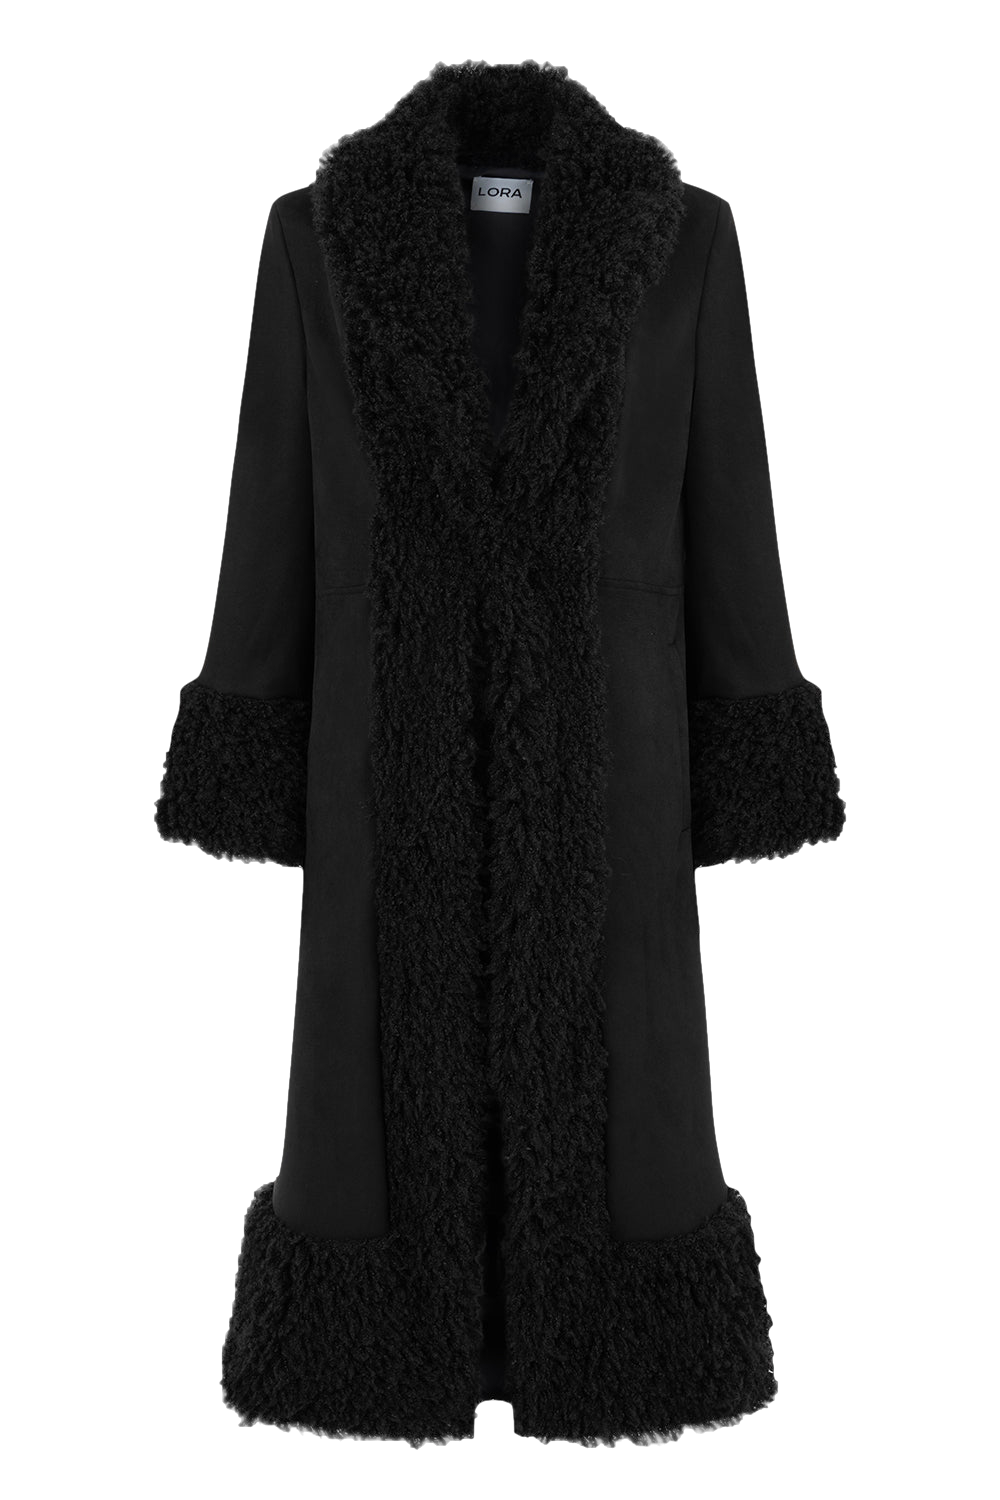 Lora Black Faux Fur Suede Long Coat von Lora Istanbul